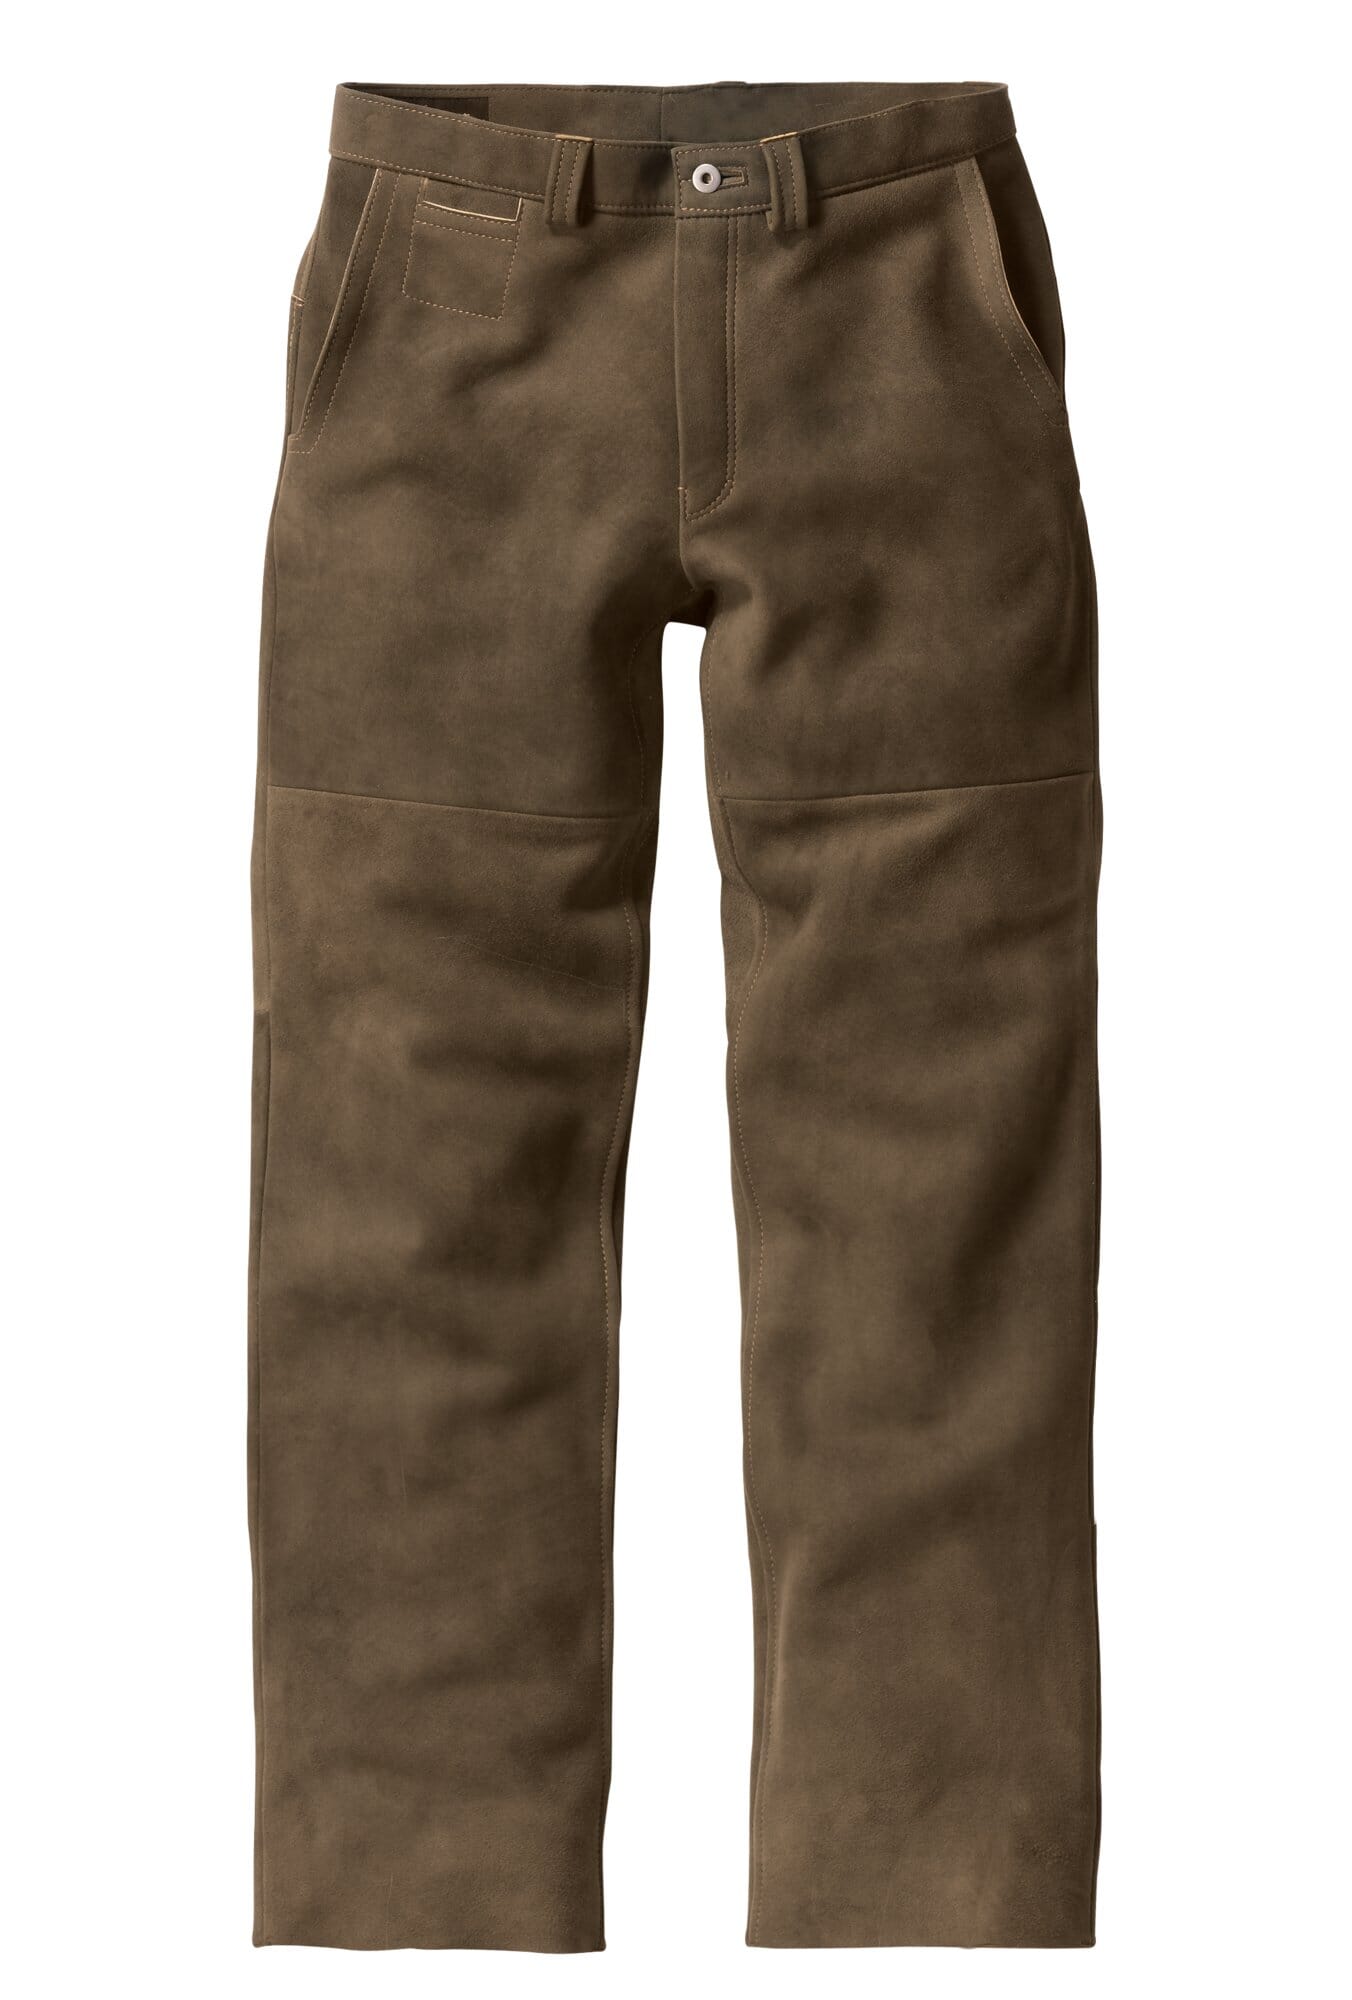 https://assets.manufactum.de/p/043/043885/43885_01.jpg/deerskin-trousers-old-tanned.jpg